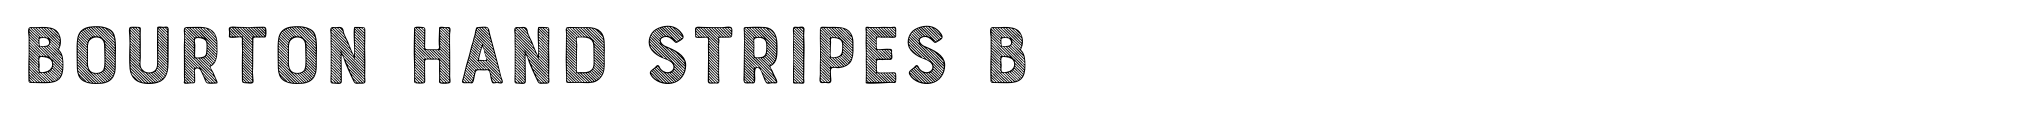 Bourton Hand Stripes B image